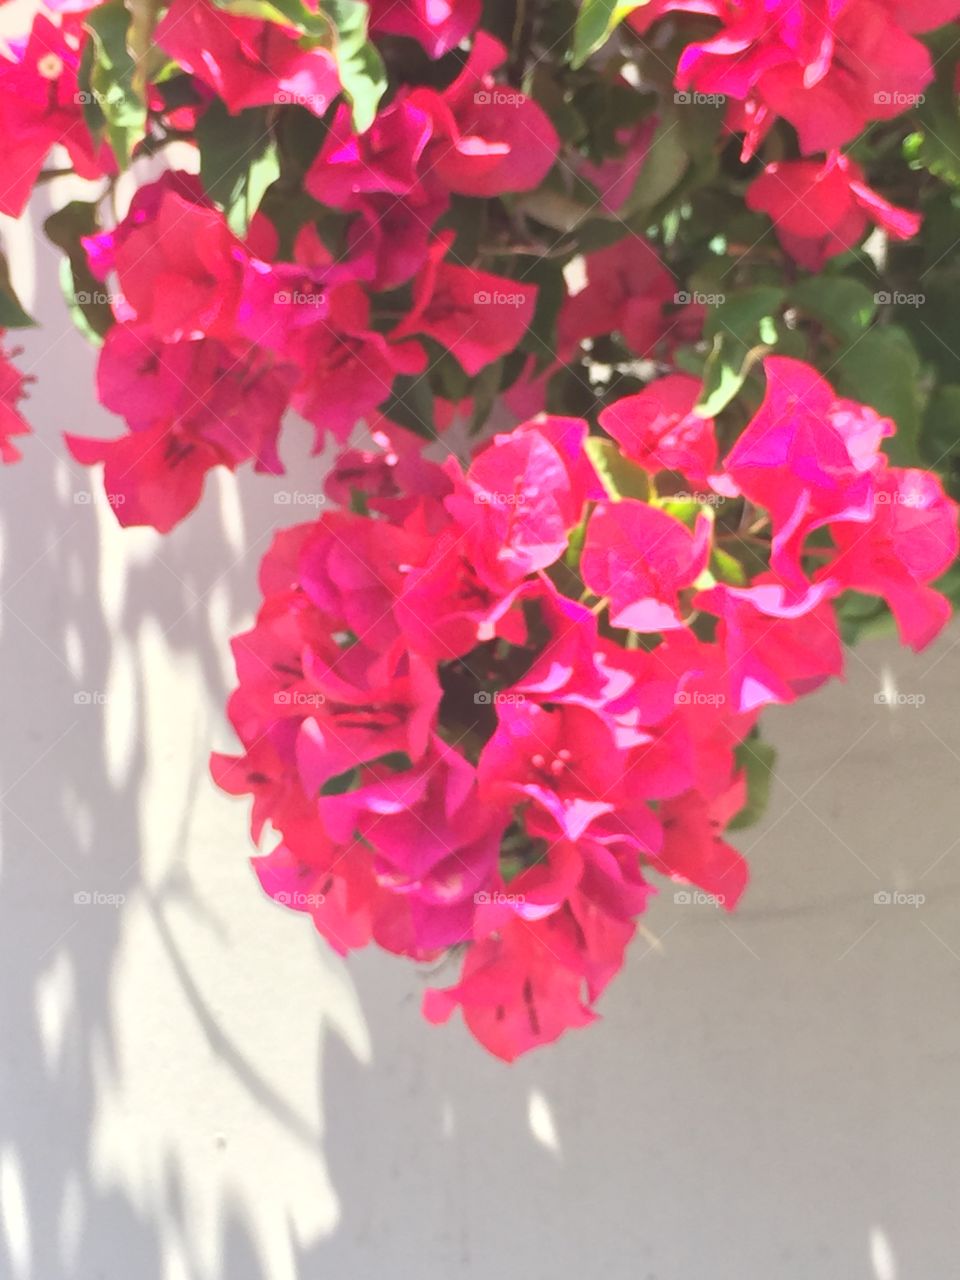 Flowers in Cali